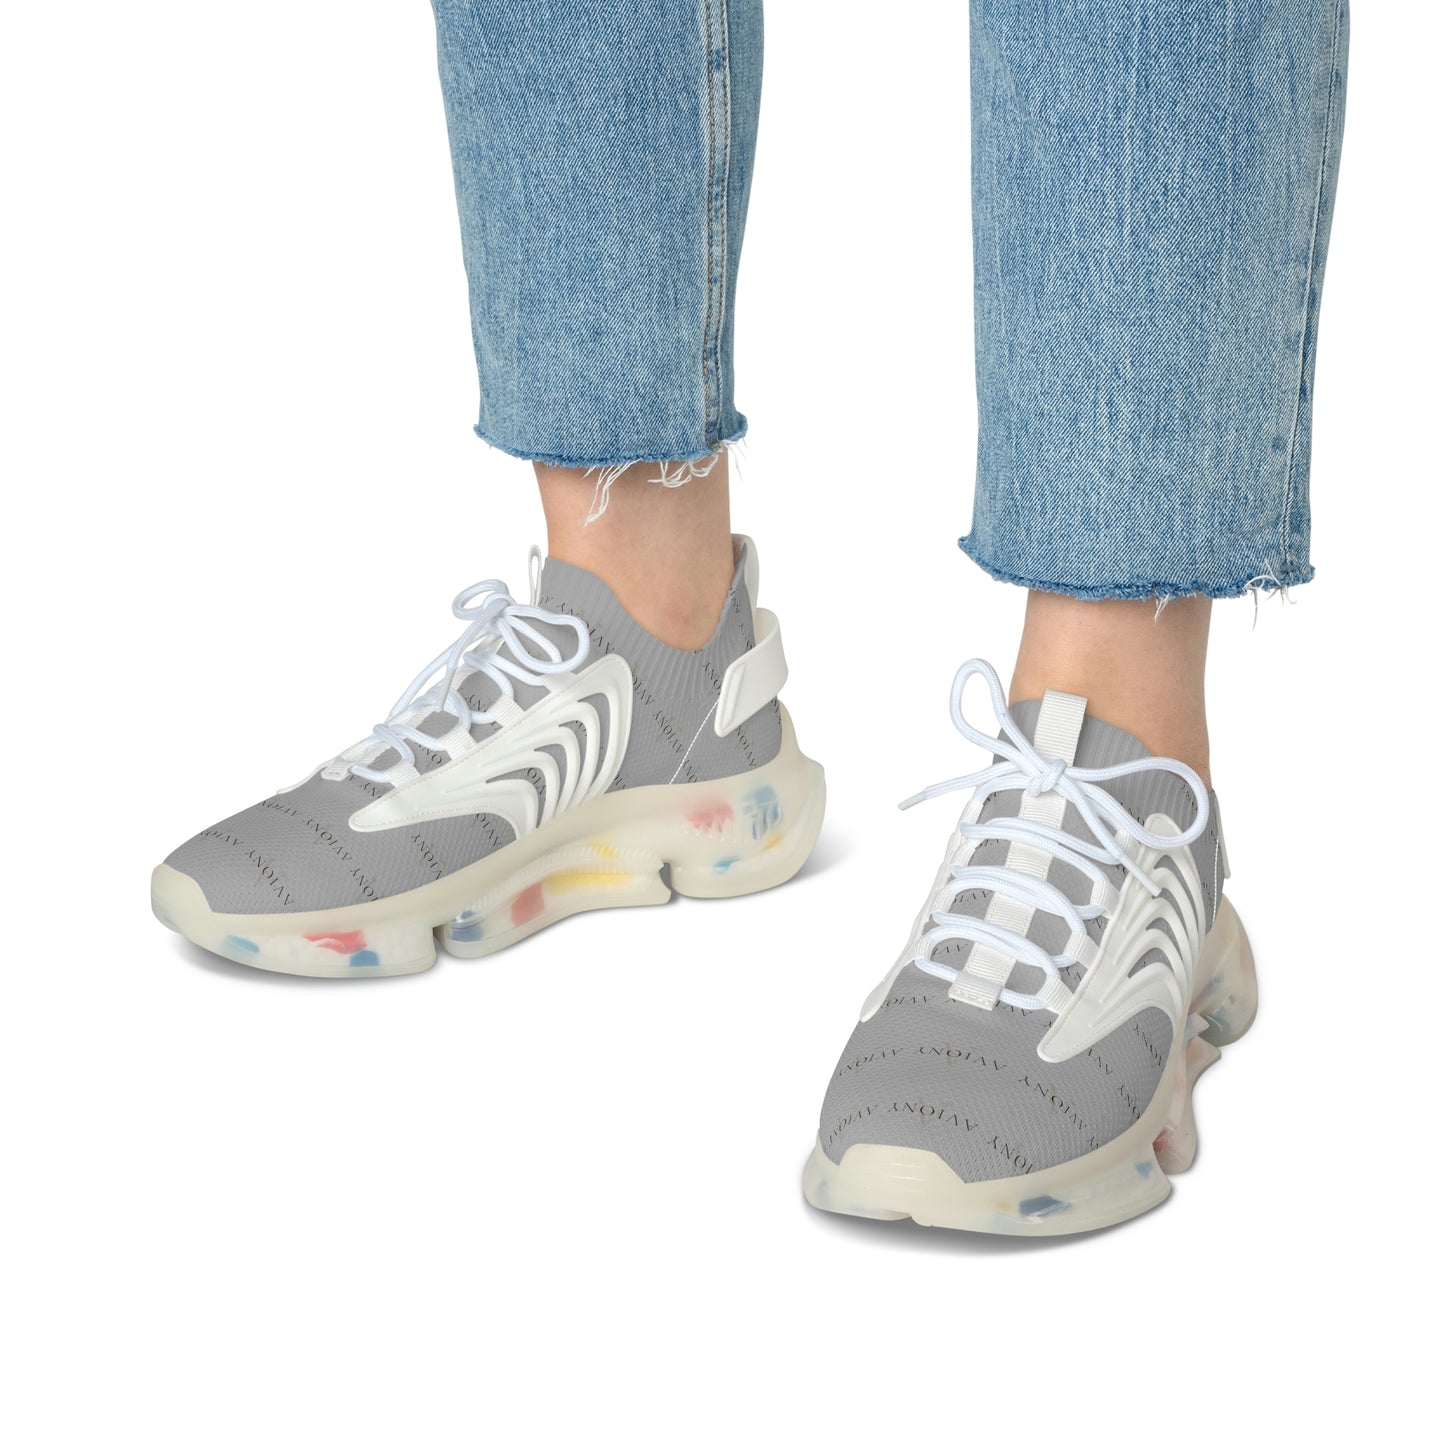 AVIONY Custom Design Women's Mesh Sneakers